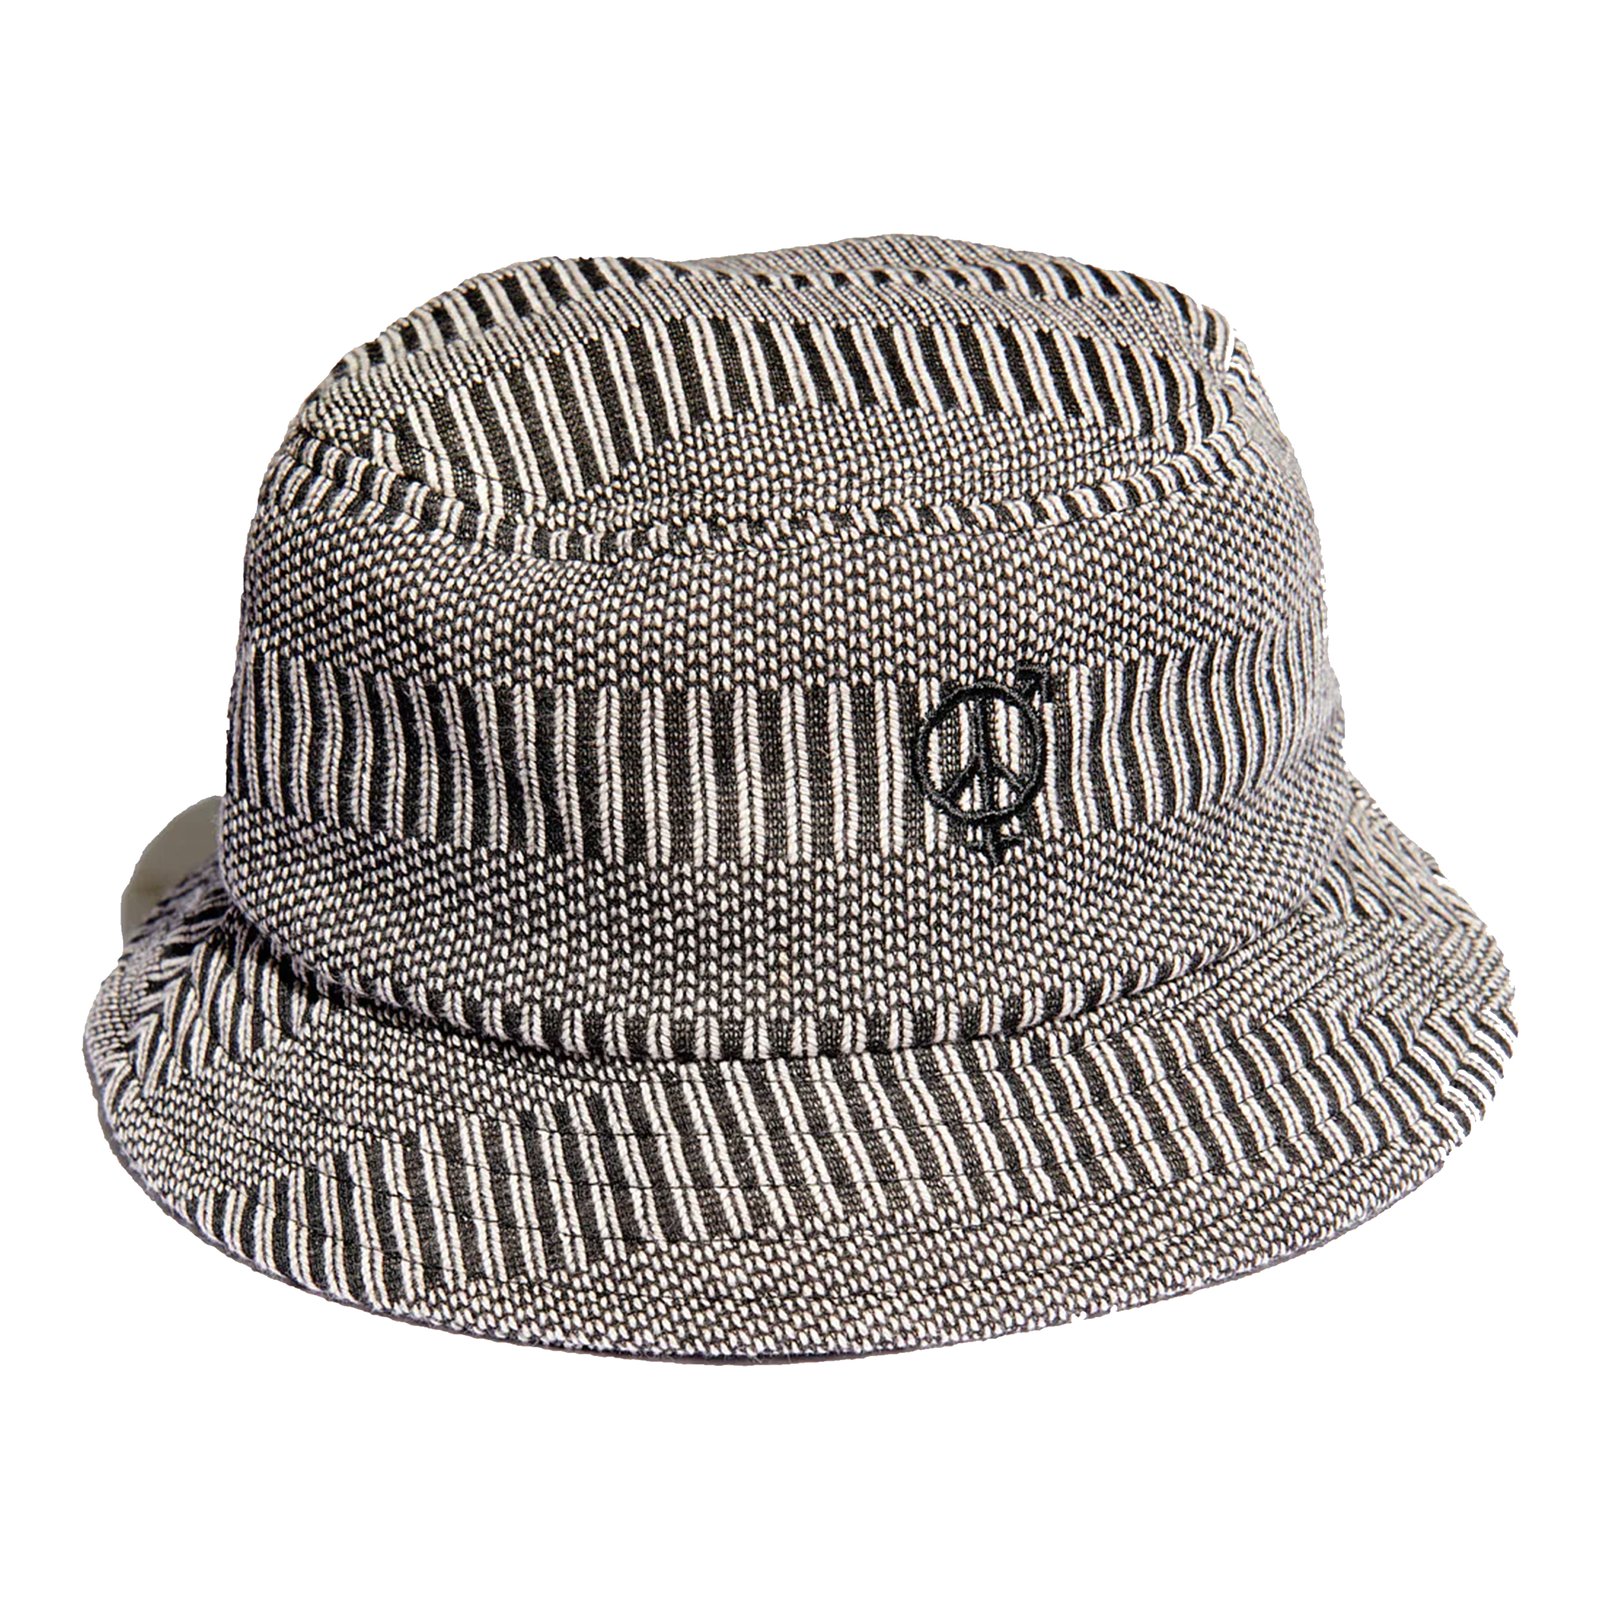 Sexhippies - Jacquard Knit Bucket Hat | densouvenir